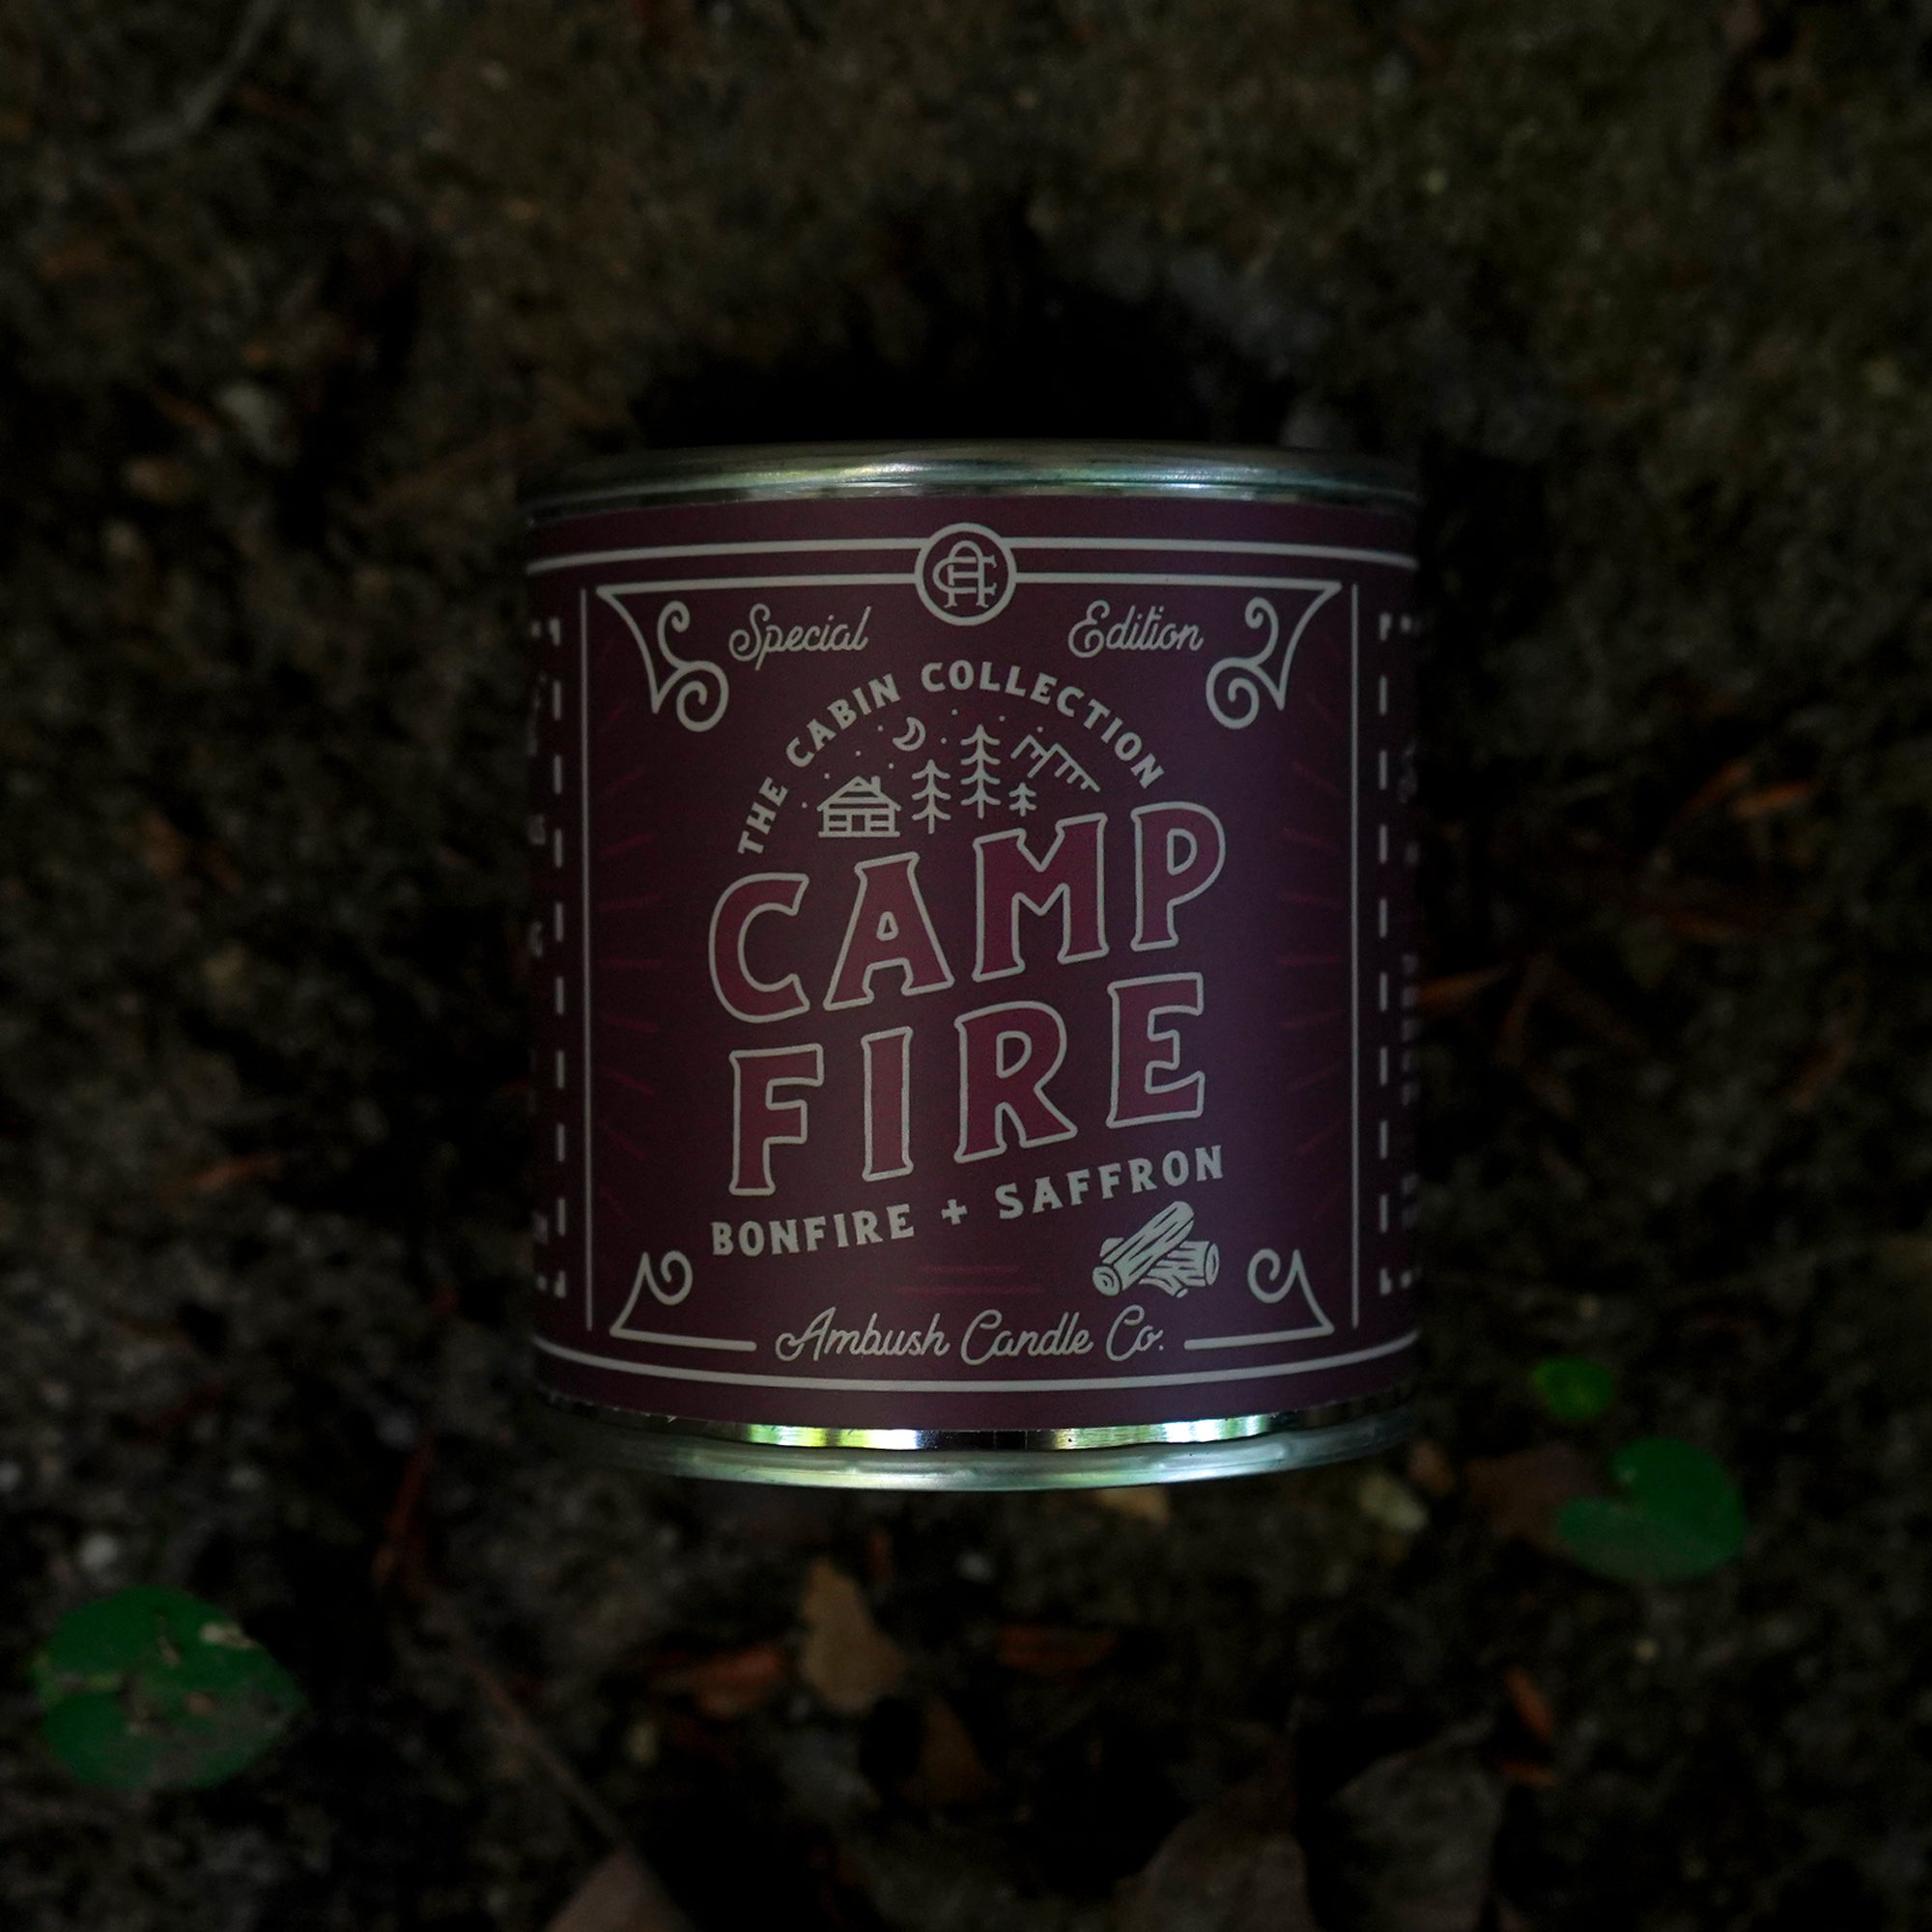 Ambush Candle Co. Recyclable Soy Candle, Bonfire and Saffron scent